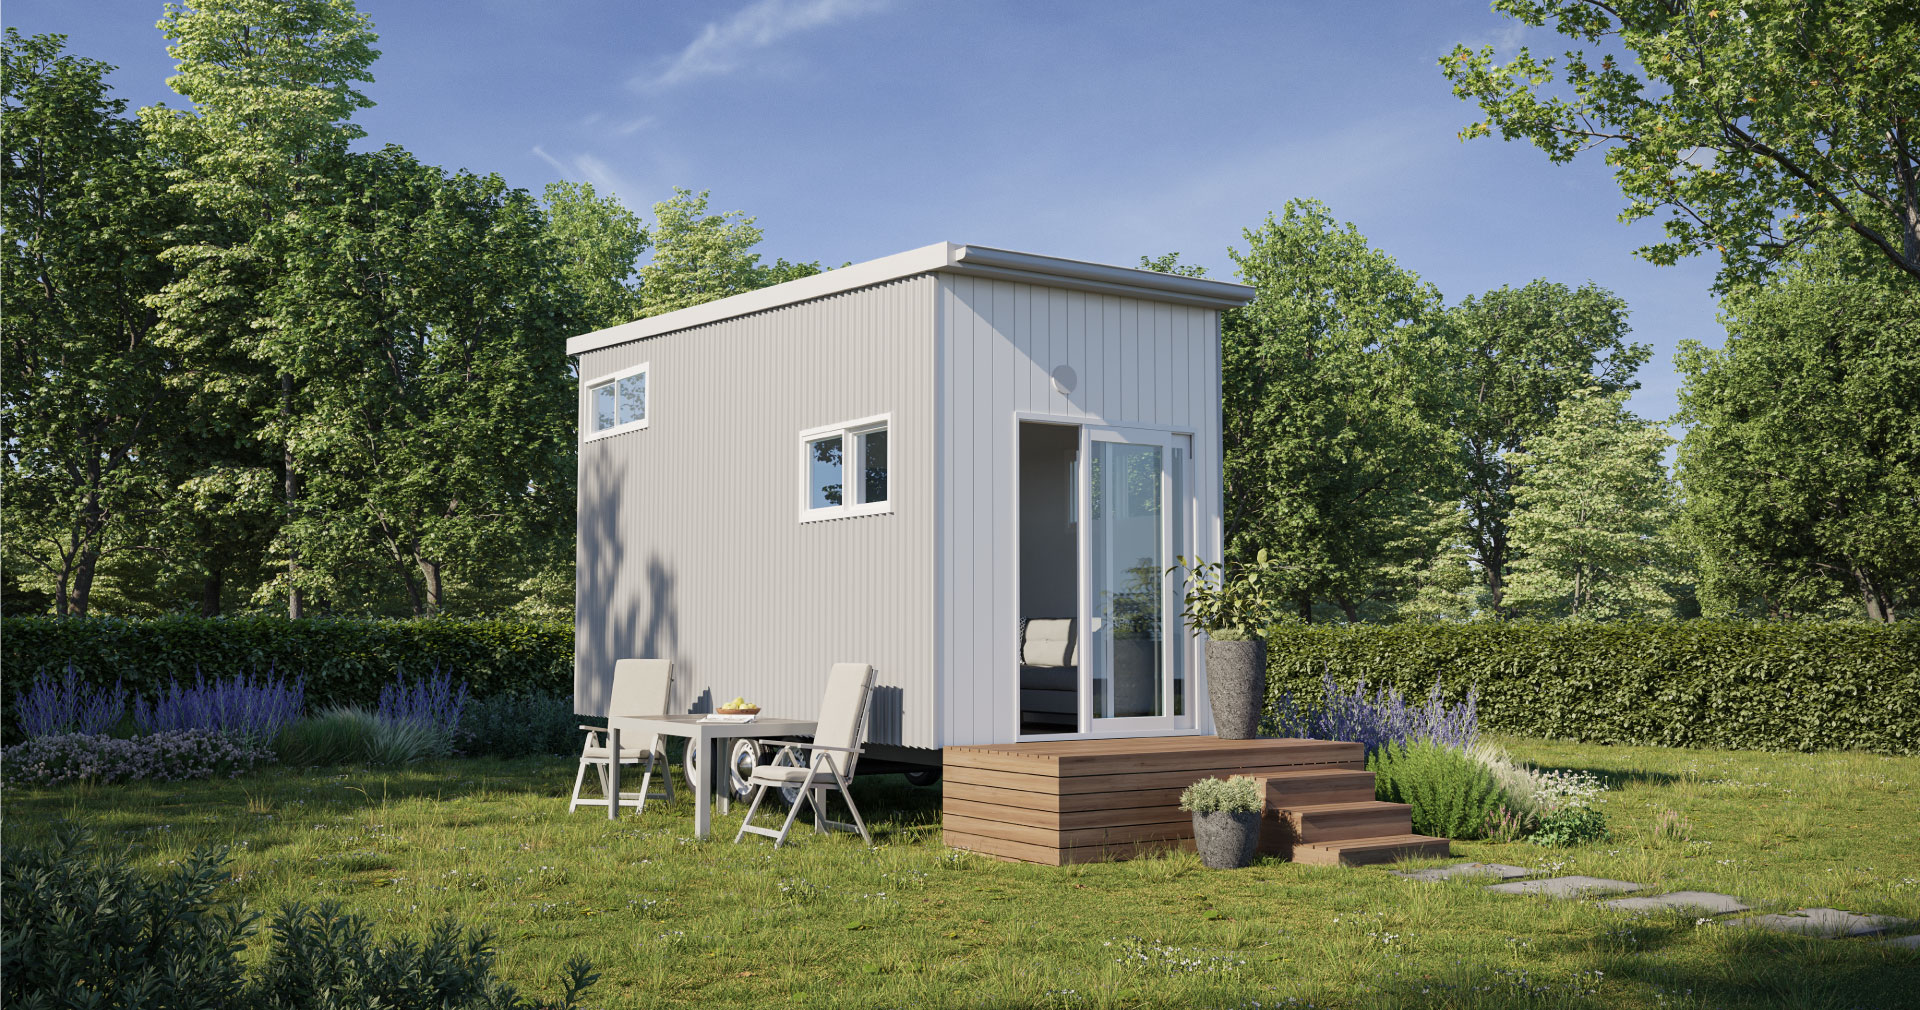 WheelHouse 6.0 compact tiny home